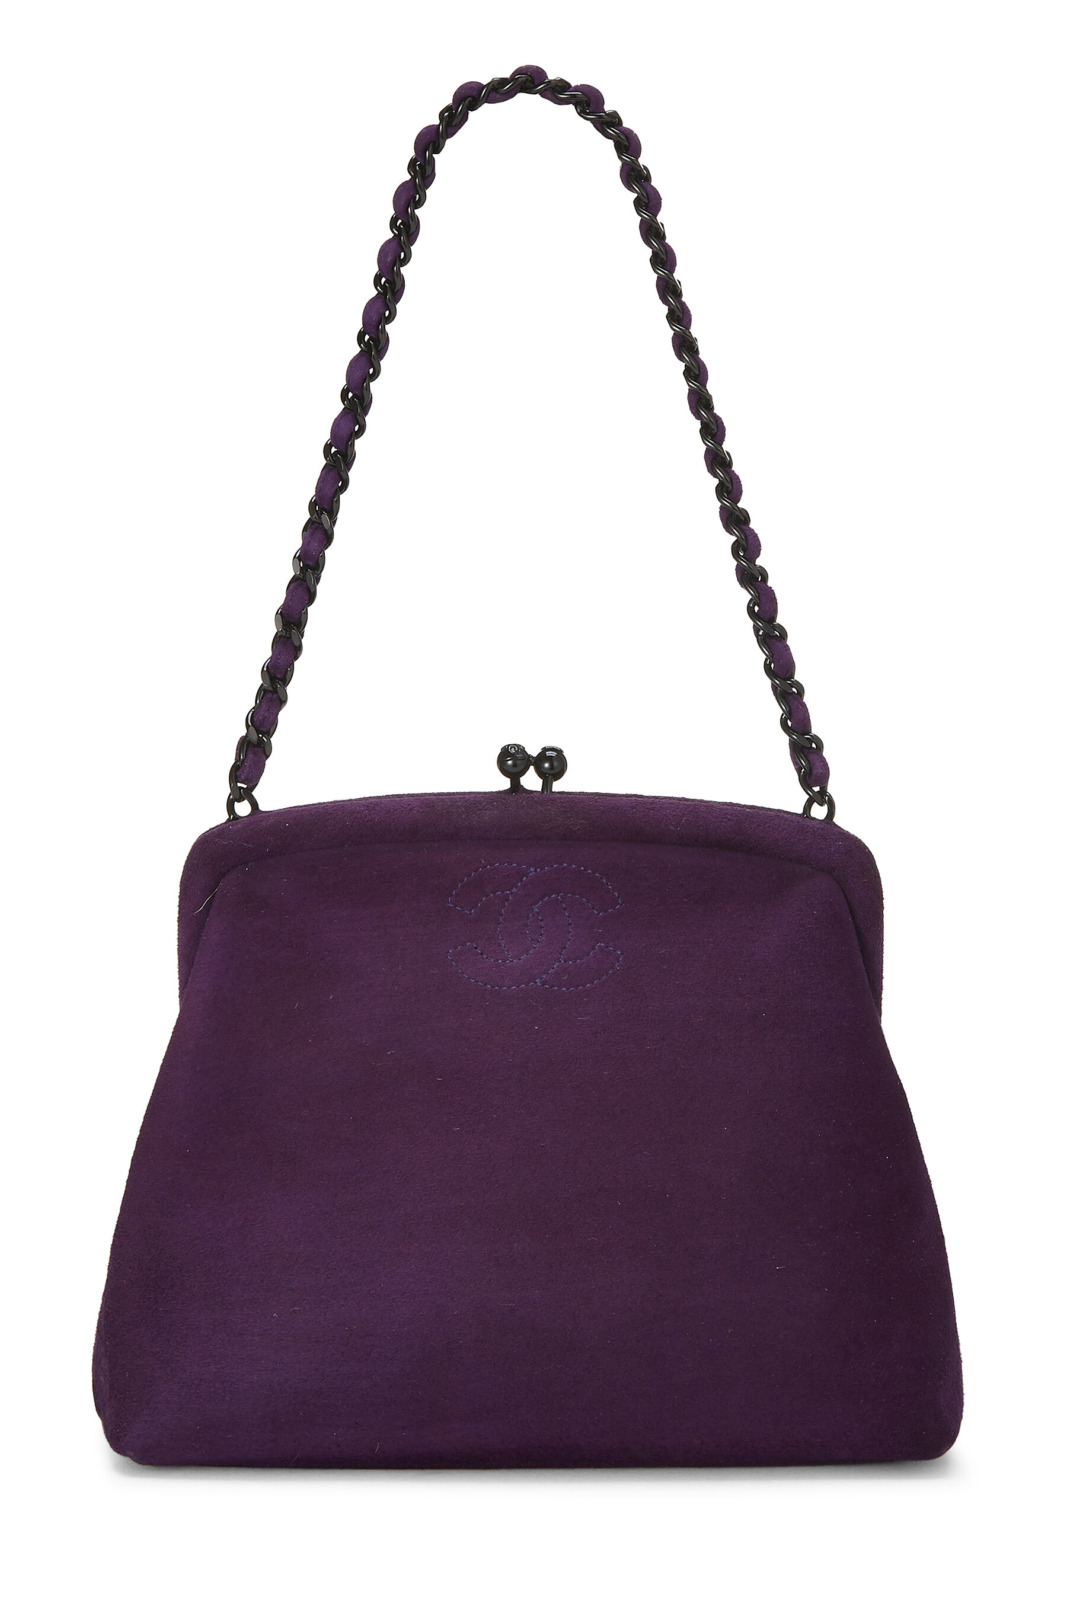 WGACA - Women's Mini Bag Purple - Chanel GOOFASH